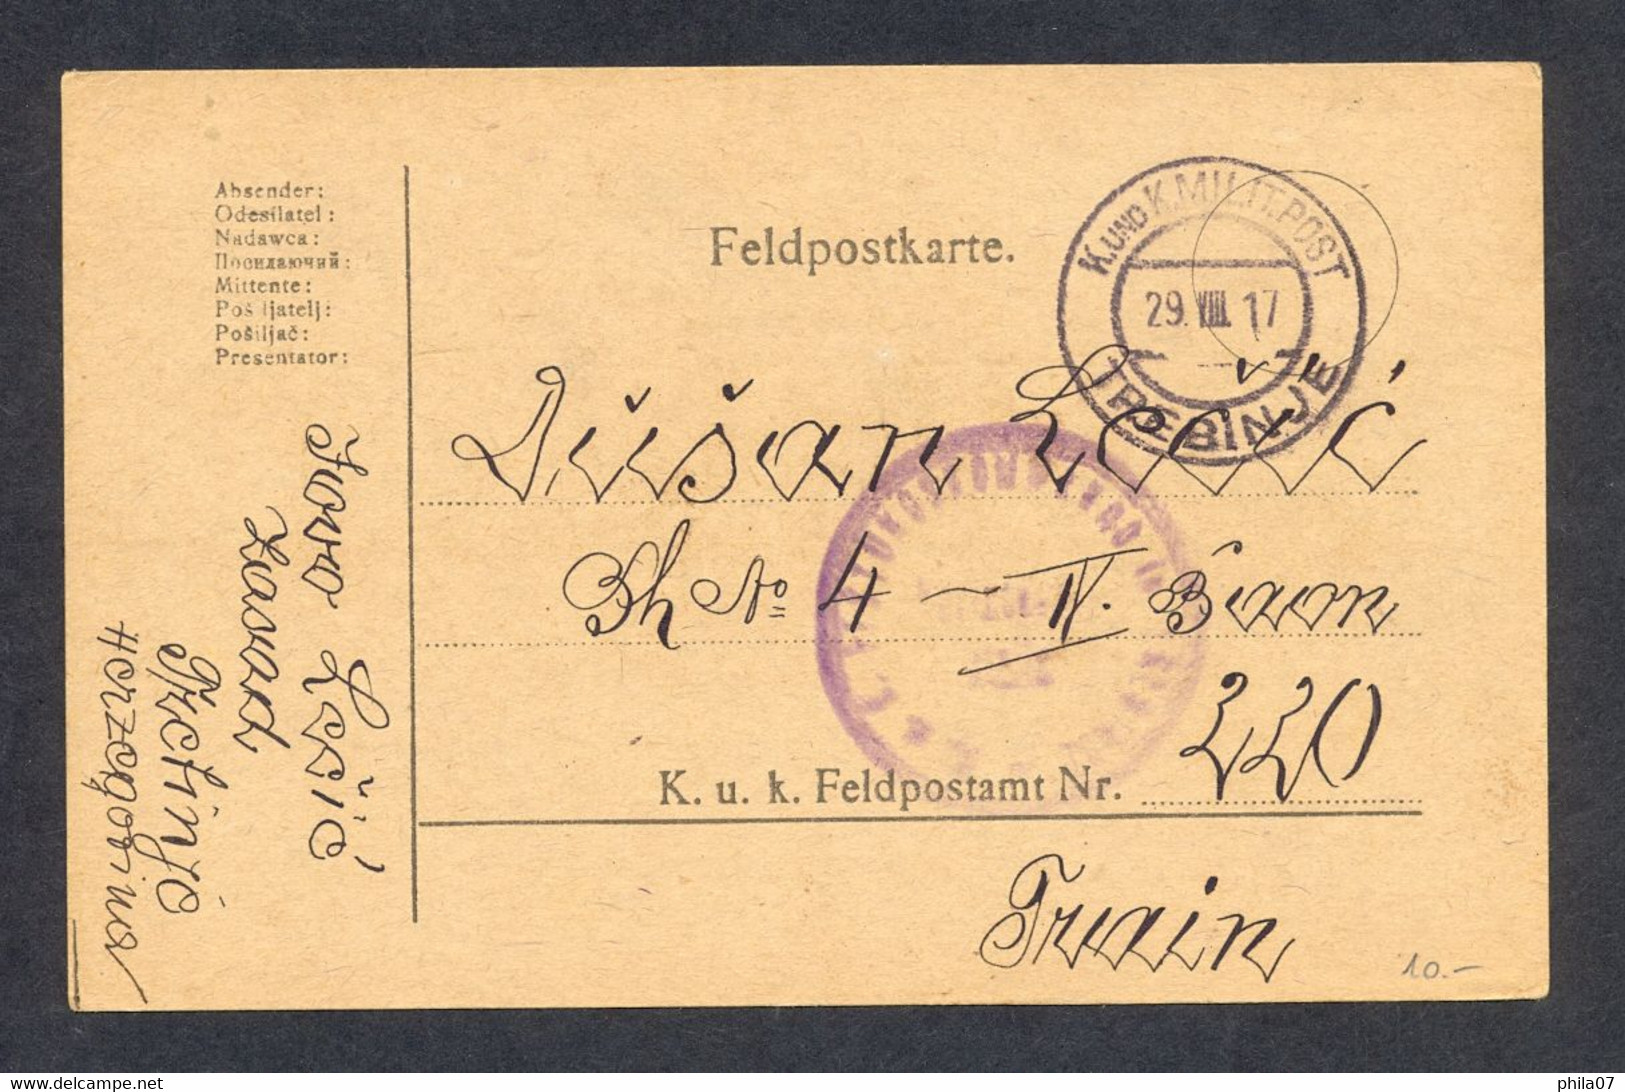 BOSNIA AND HERZEGOVINA - Military Stationery Sent From Trebinje 29.VIII. 1917. Nice Cancel 'K.und K. Milit.Post Trebinje - Bosnia And Herzegovina